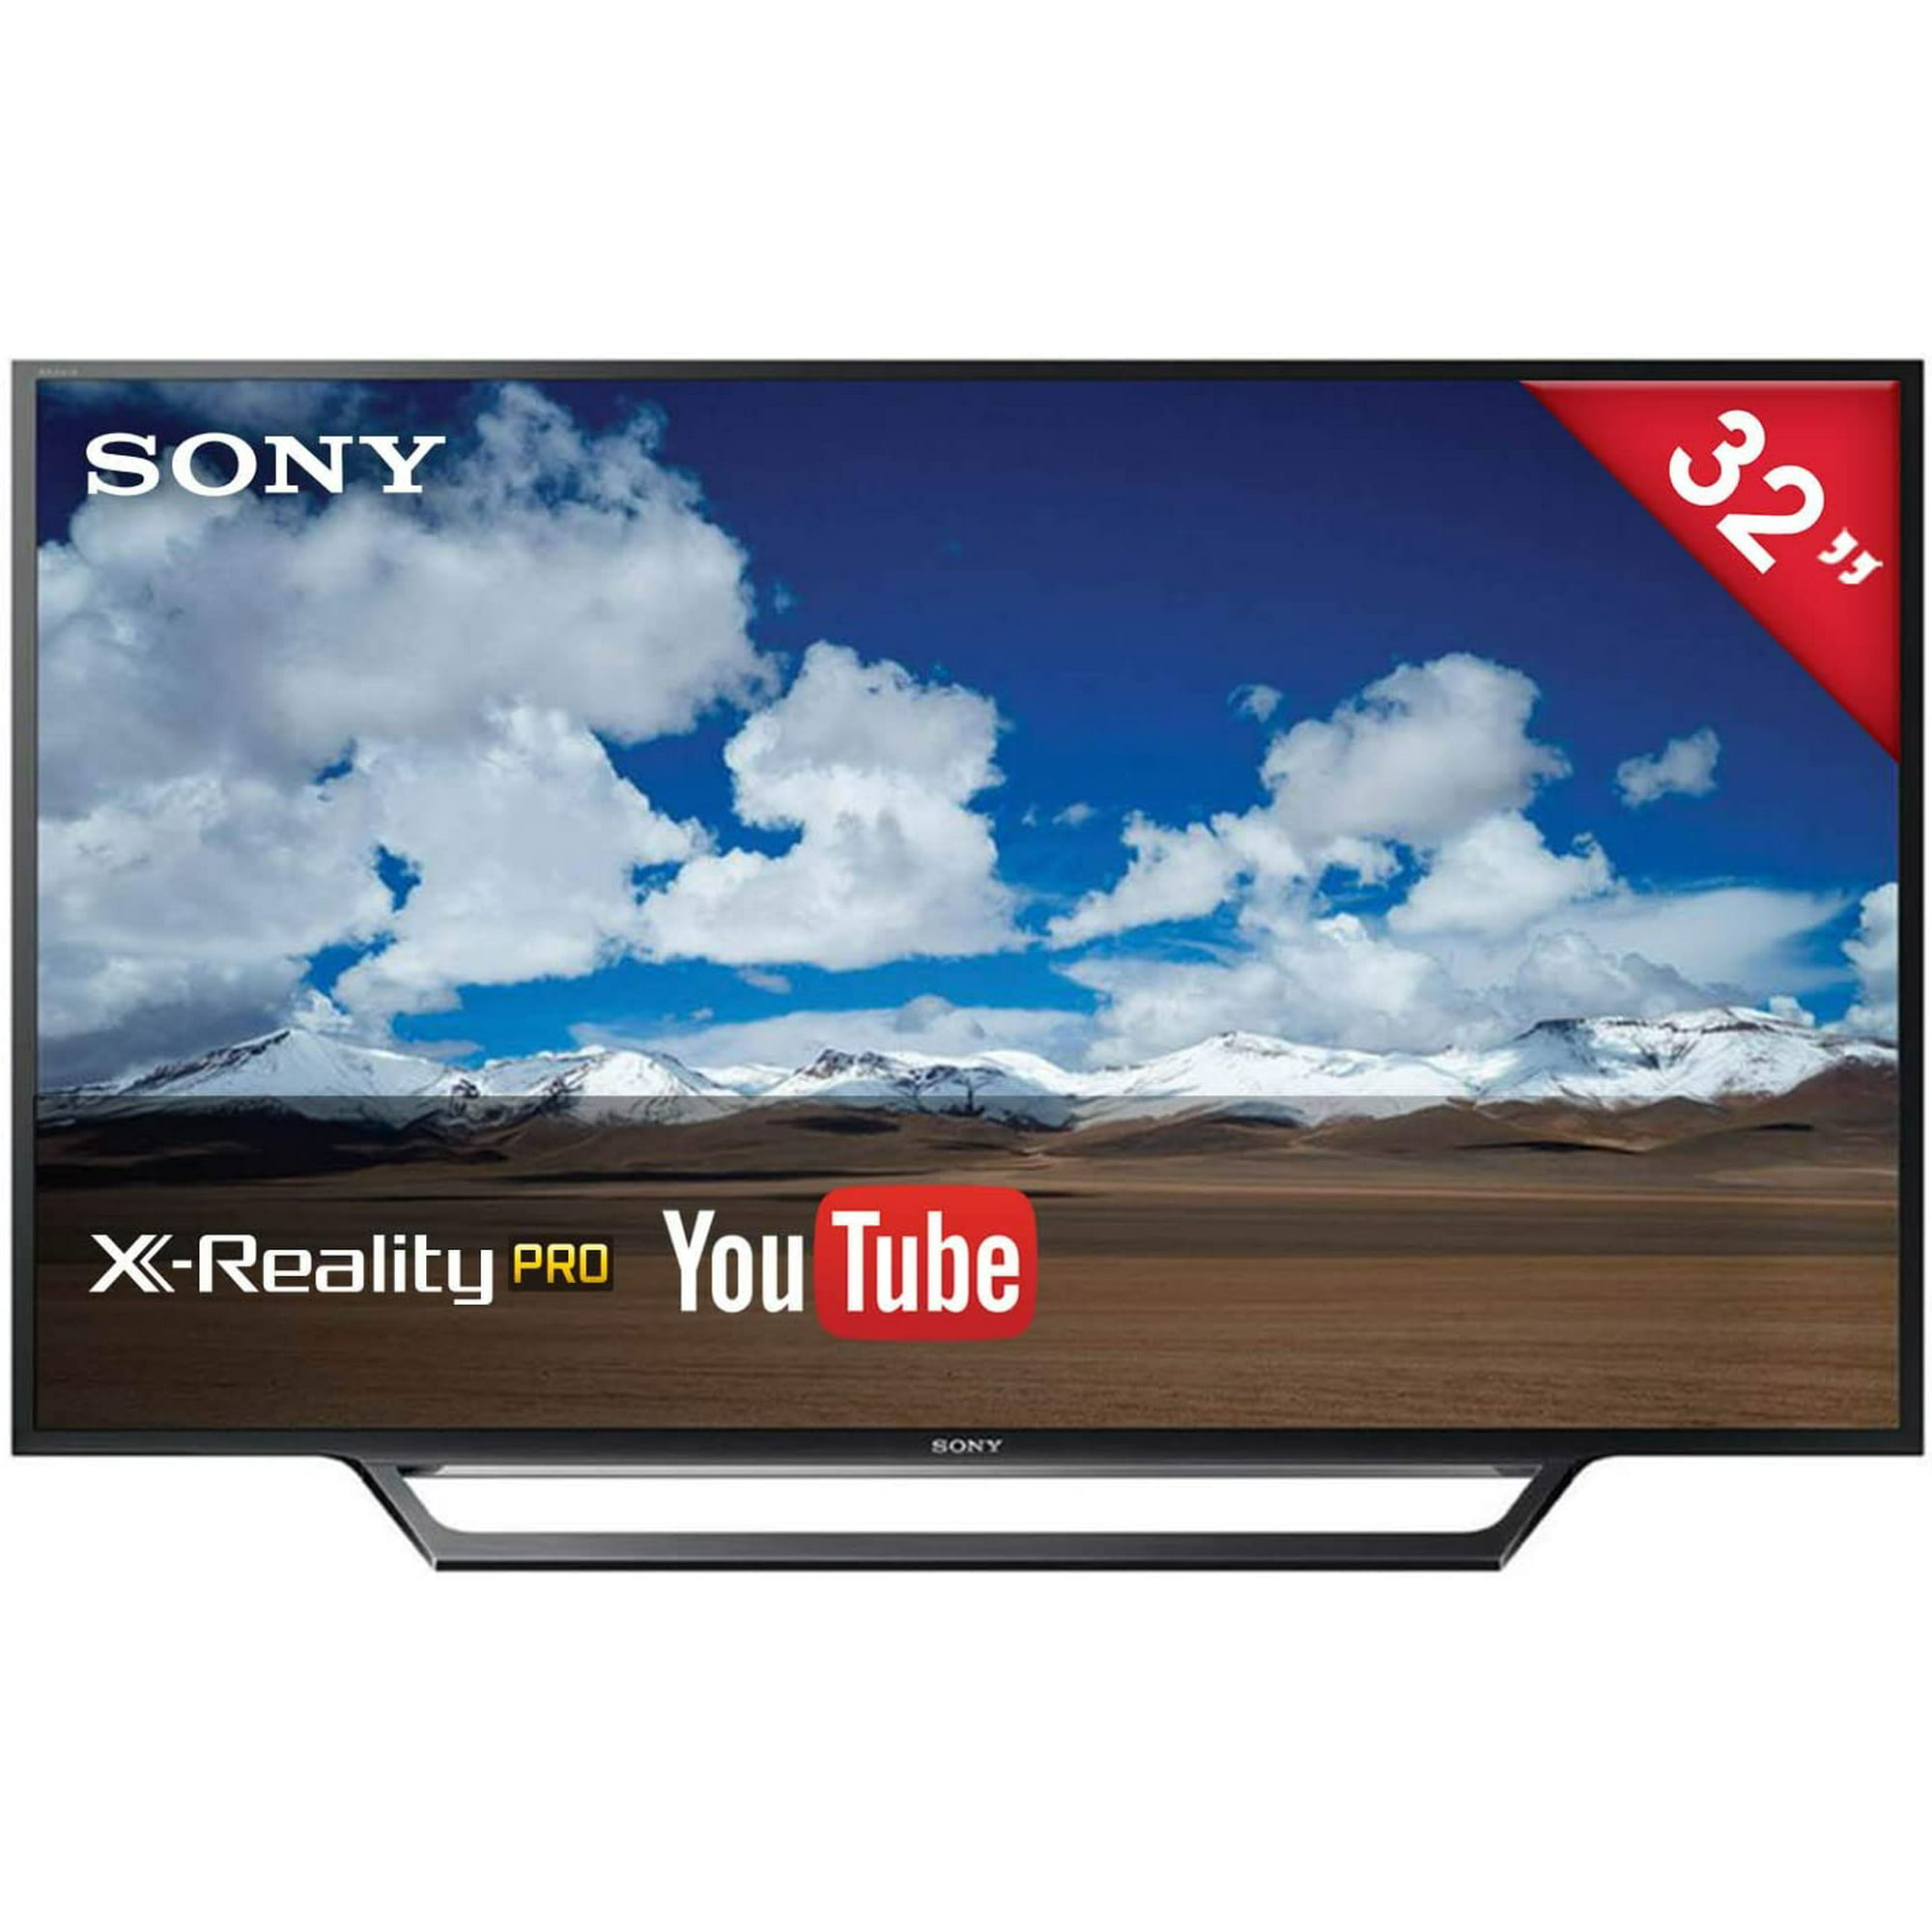 Pantalla TV Sony 32 Pulg KDL-32R400A Lcd Television - D bazar